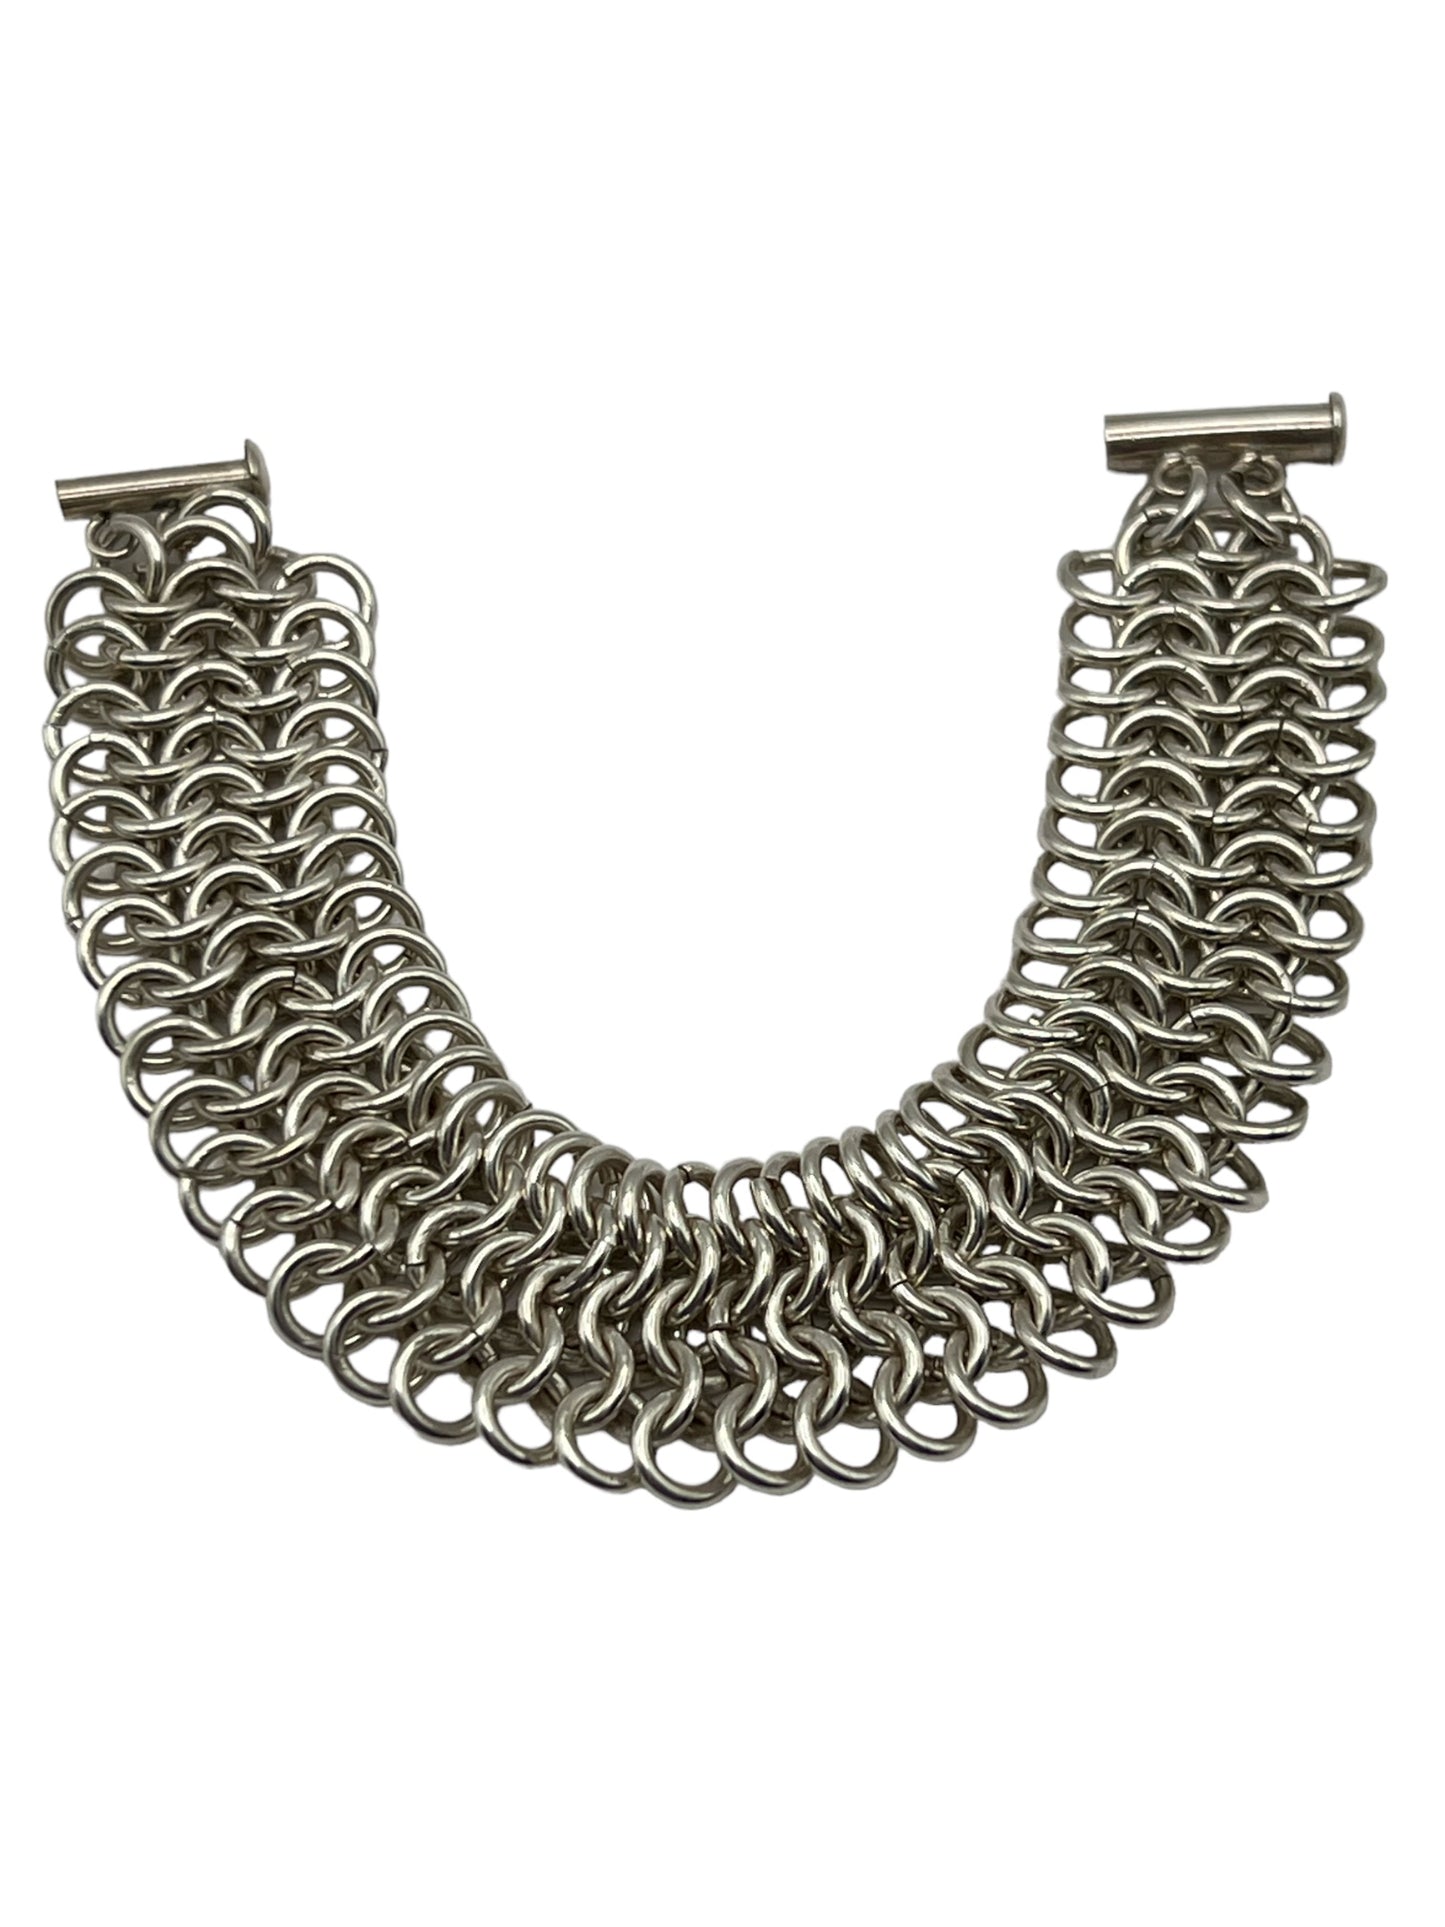 European Large Weave Sterling Silver Bracelet